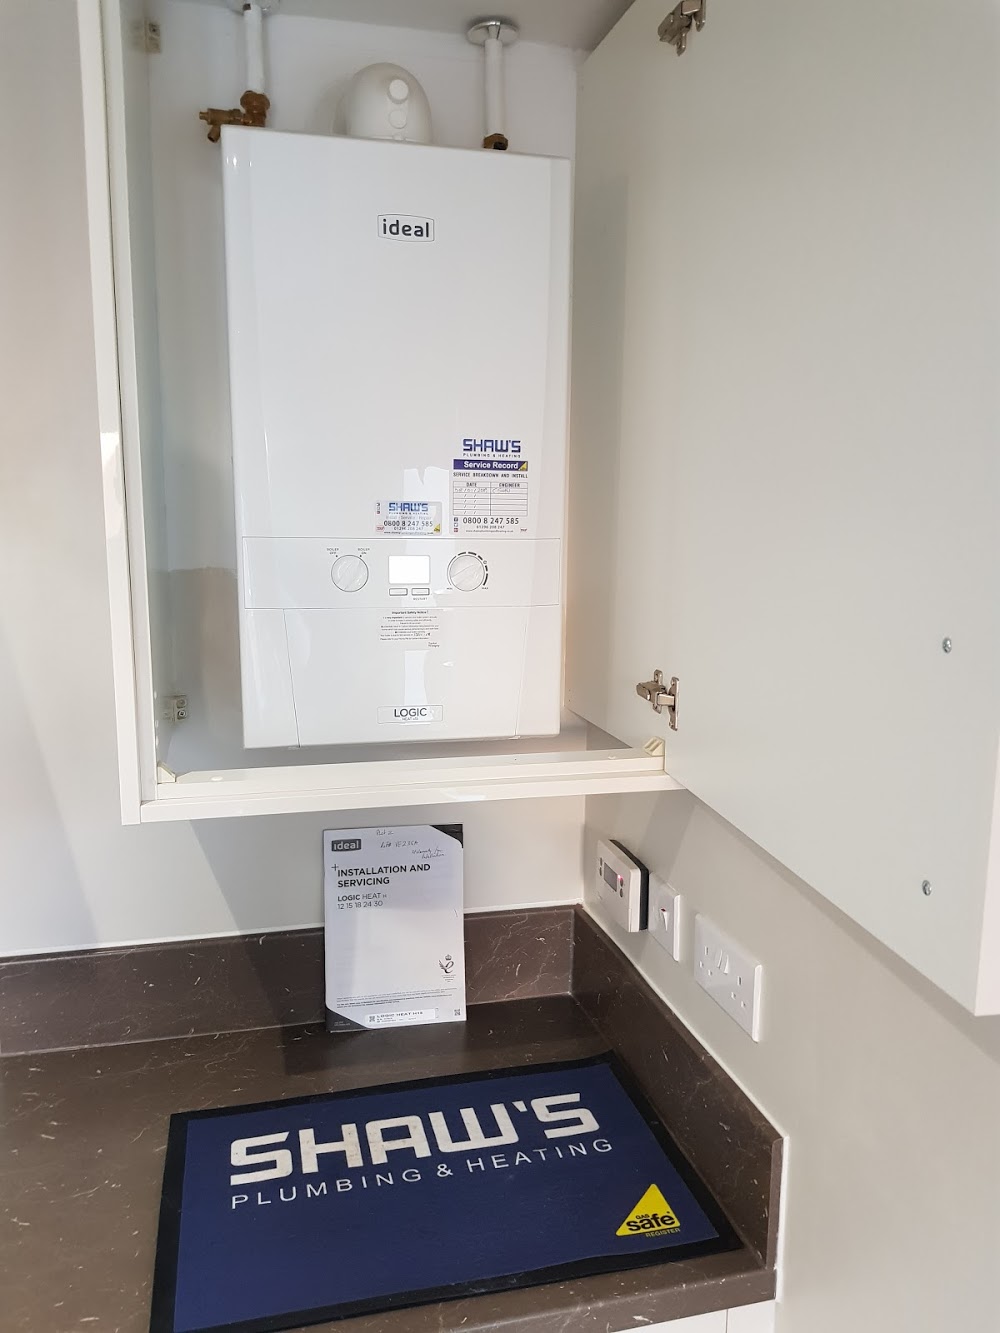 Shaw’s Plumbing & Heating – Gas Safe Plumber in Aylesbury